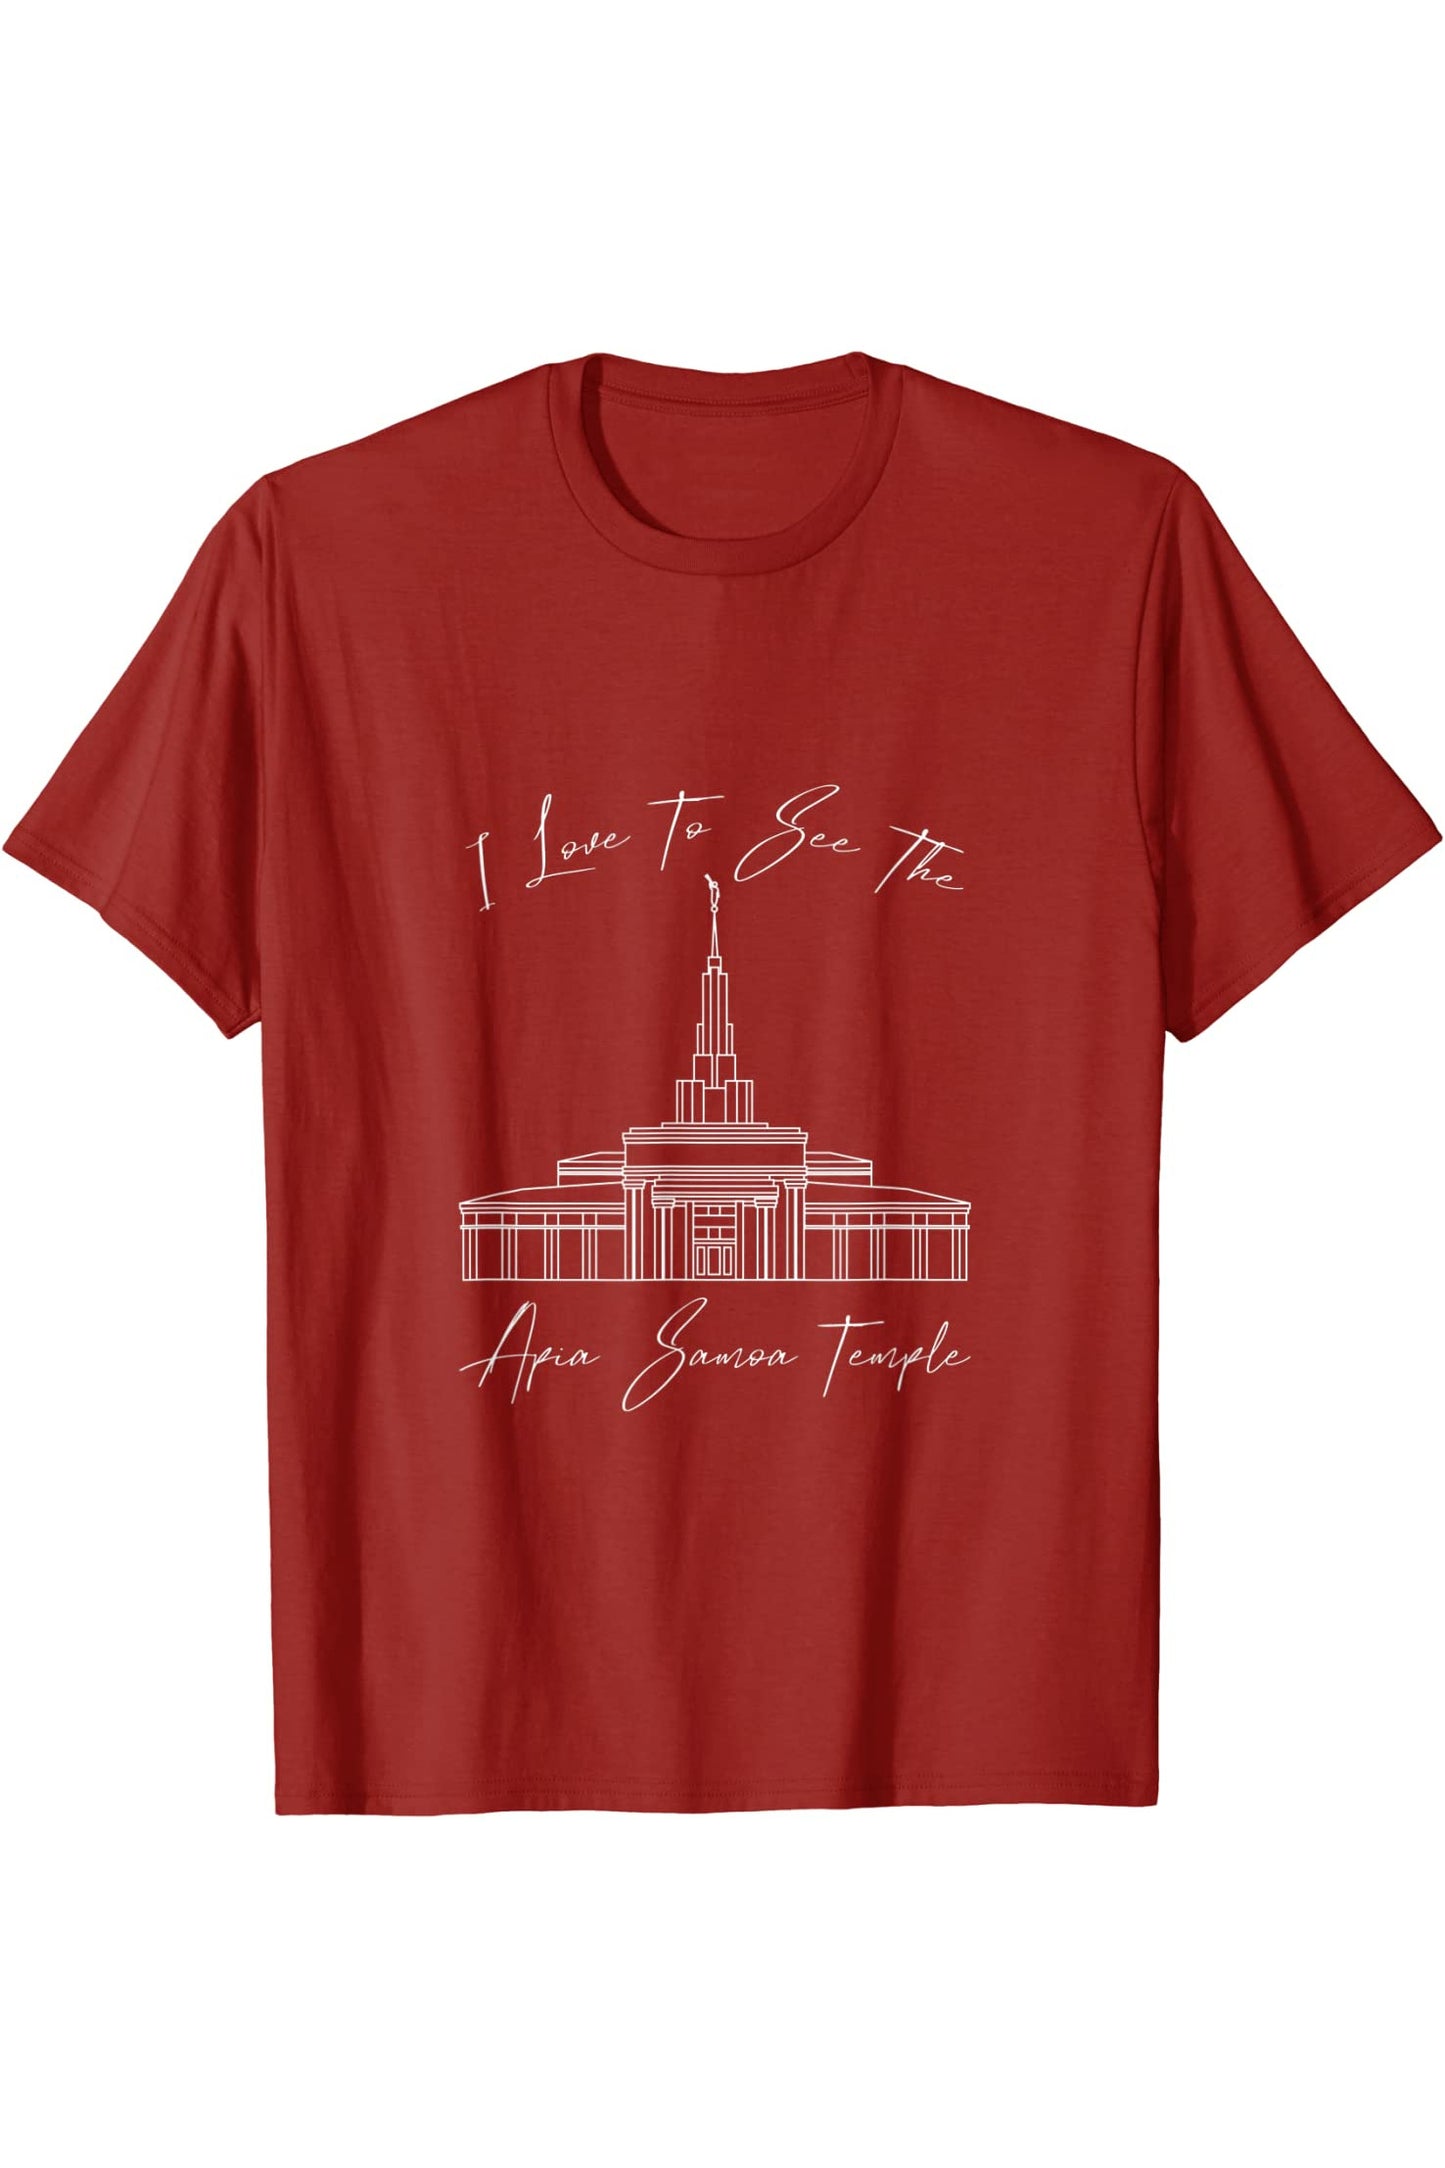 Apia Samoa Temple T-Shirt - Calligraphy Style (English) US